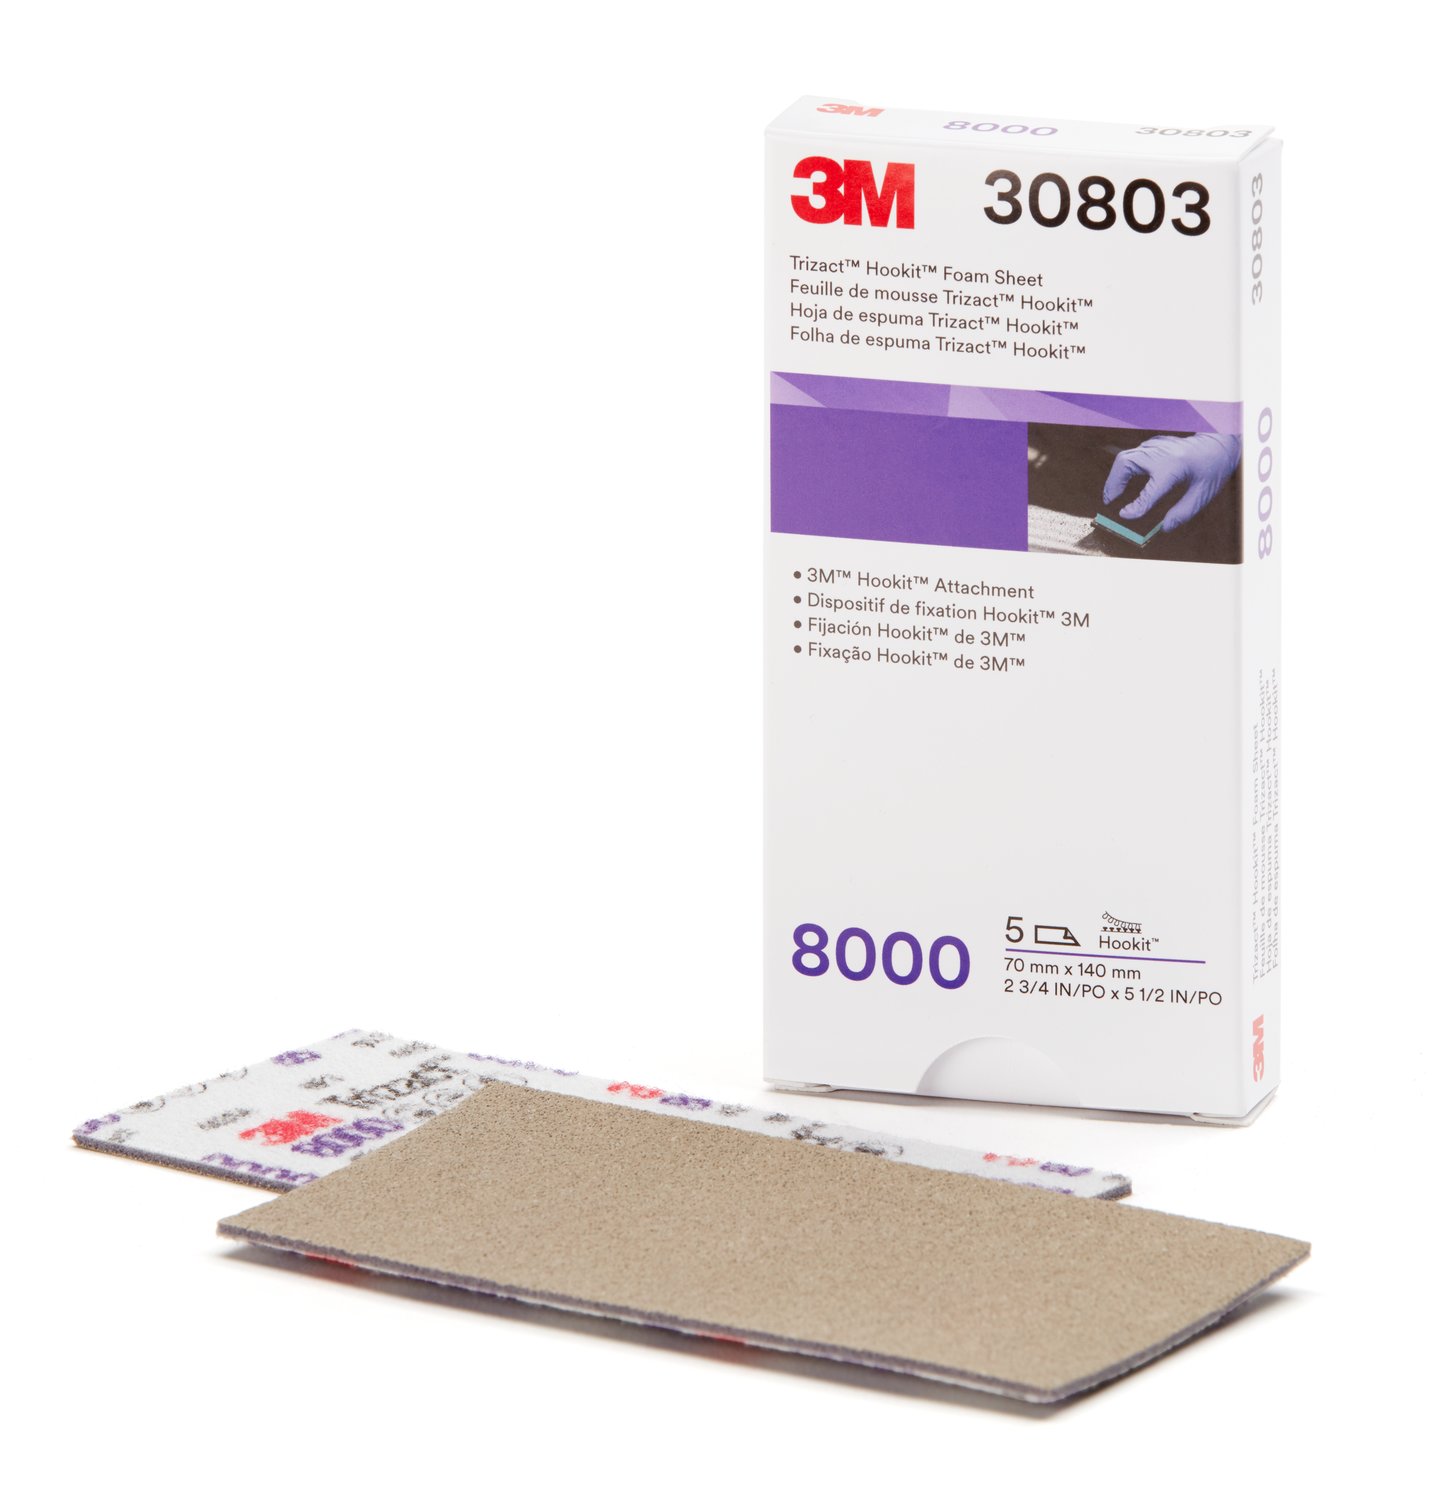 7100194290 - 3M Trizact Hookit Foam Sheet 30803, 8000,  2-3/4 in x 5-1/2 in (70 mm
x 140 mm), 5 Sheets/Carton, 10 Cartons/Case